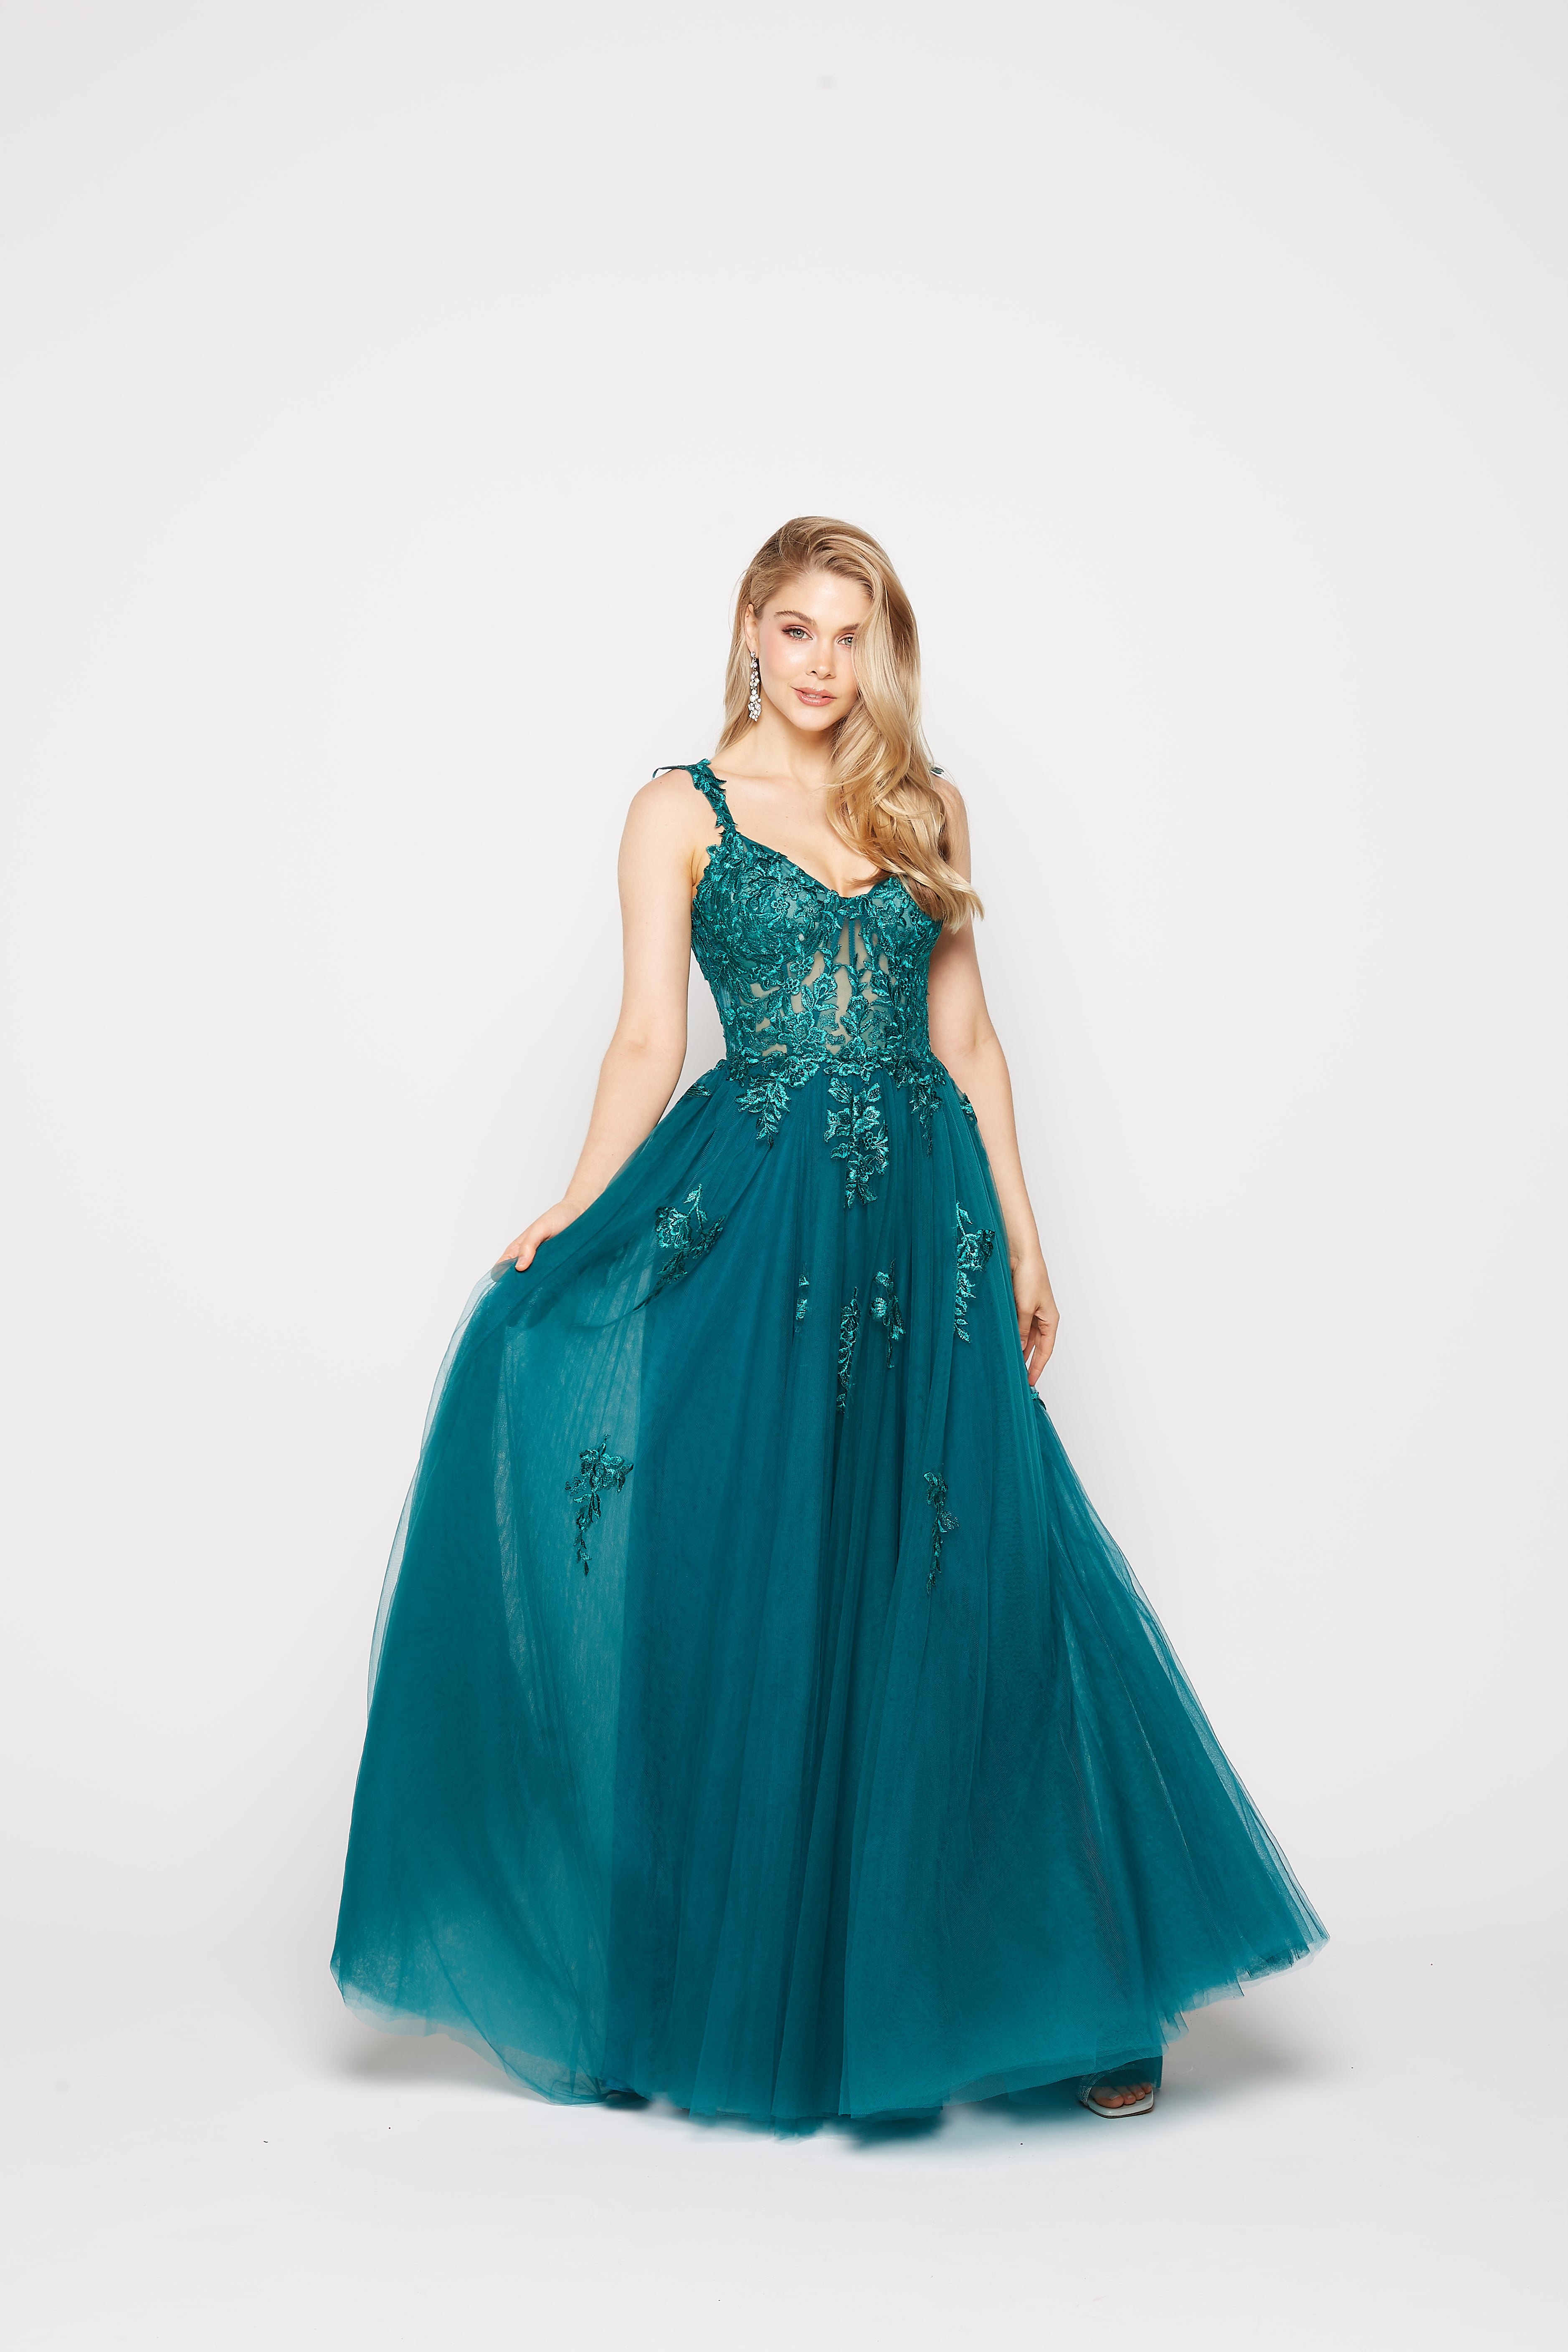 Maeve PO2317 by Tania Olsen Black, & Emerald Formal Dress